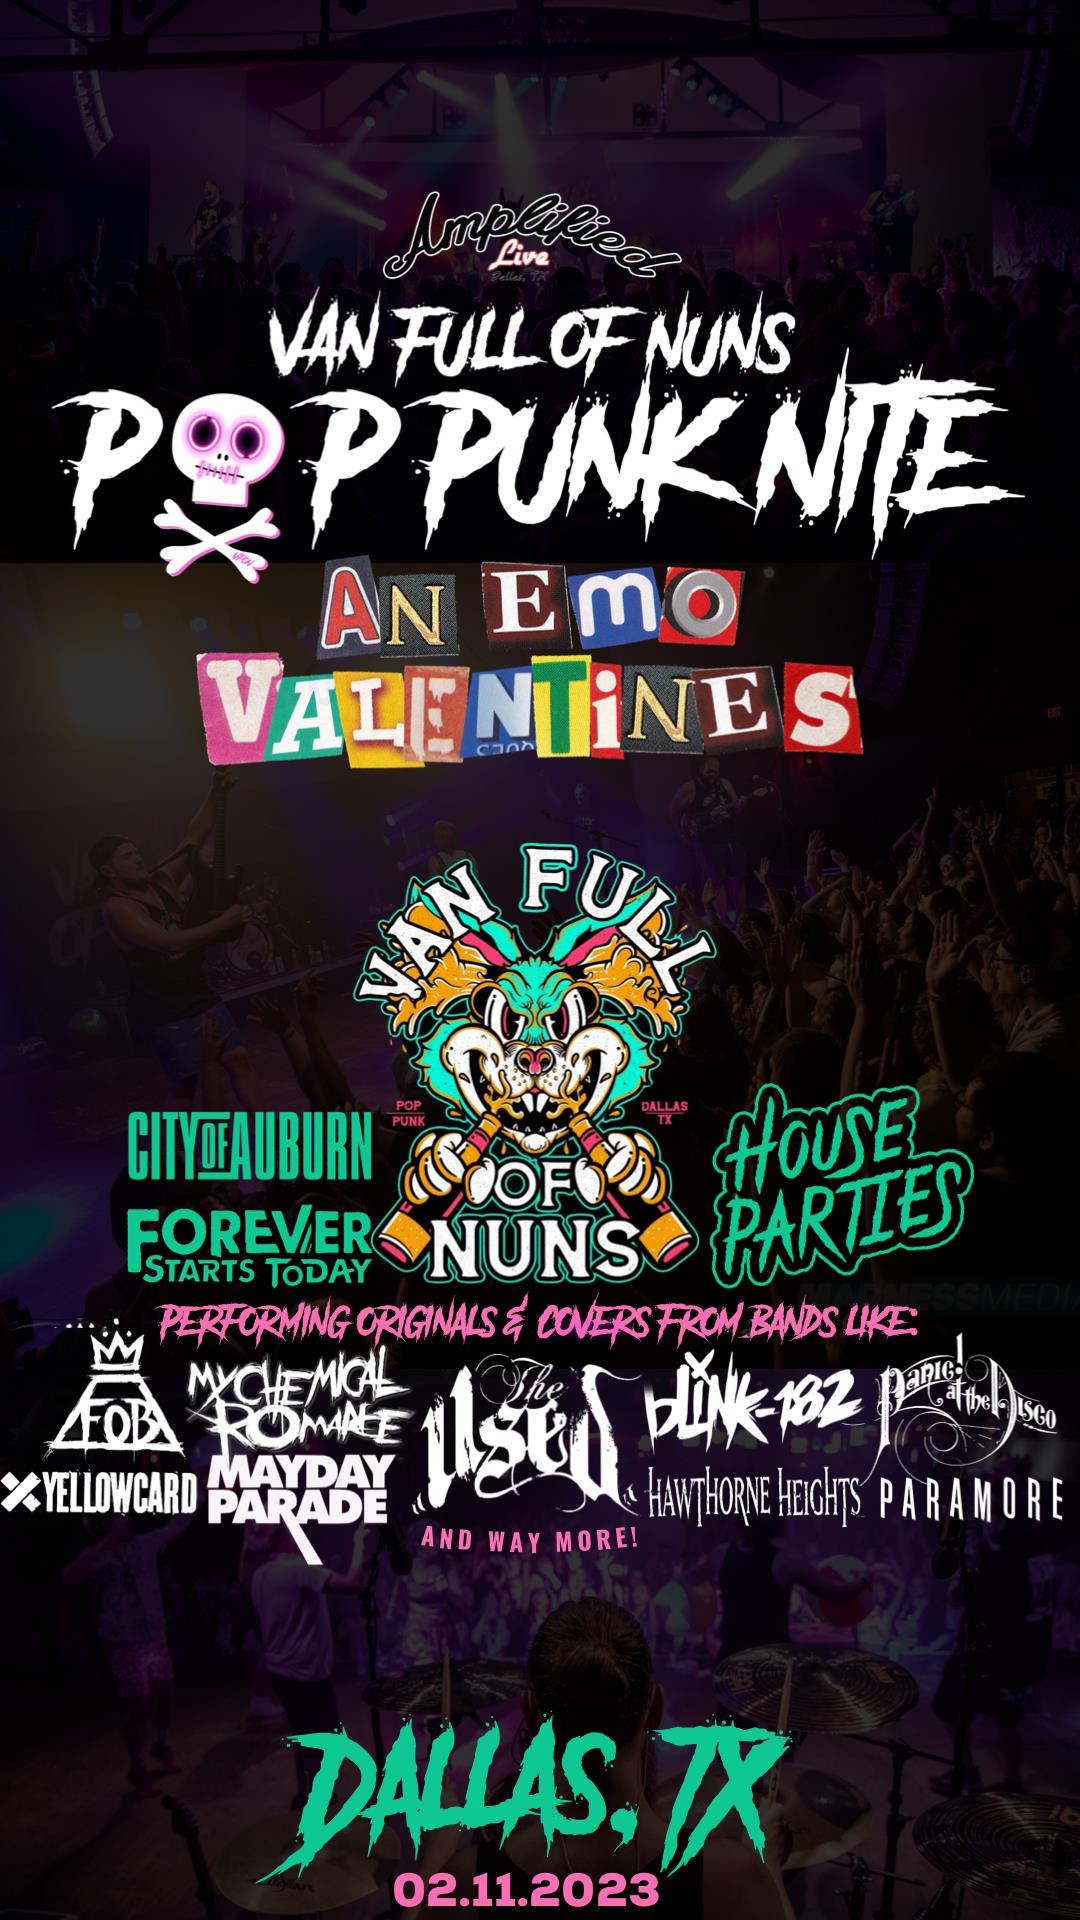 Pop Punk Nite: An Emo Valentines! By: Van Full of Nuns